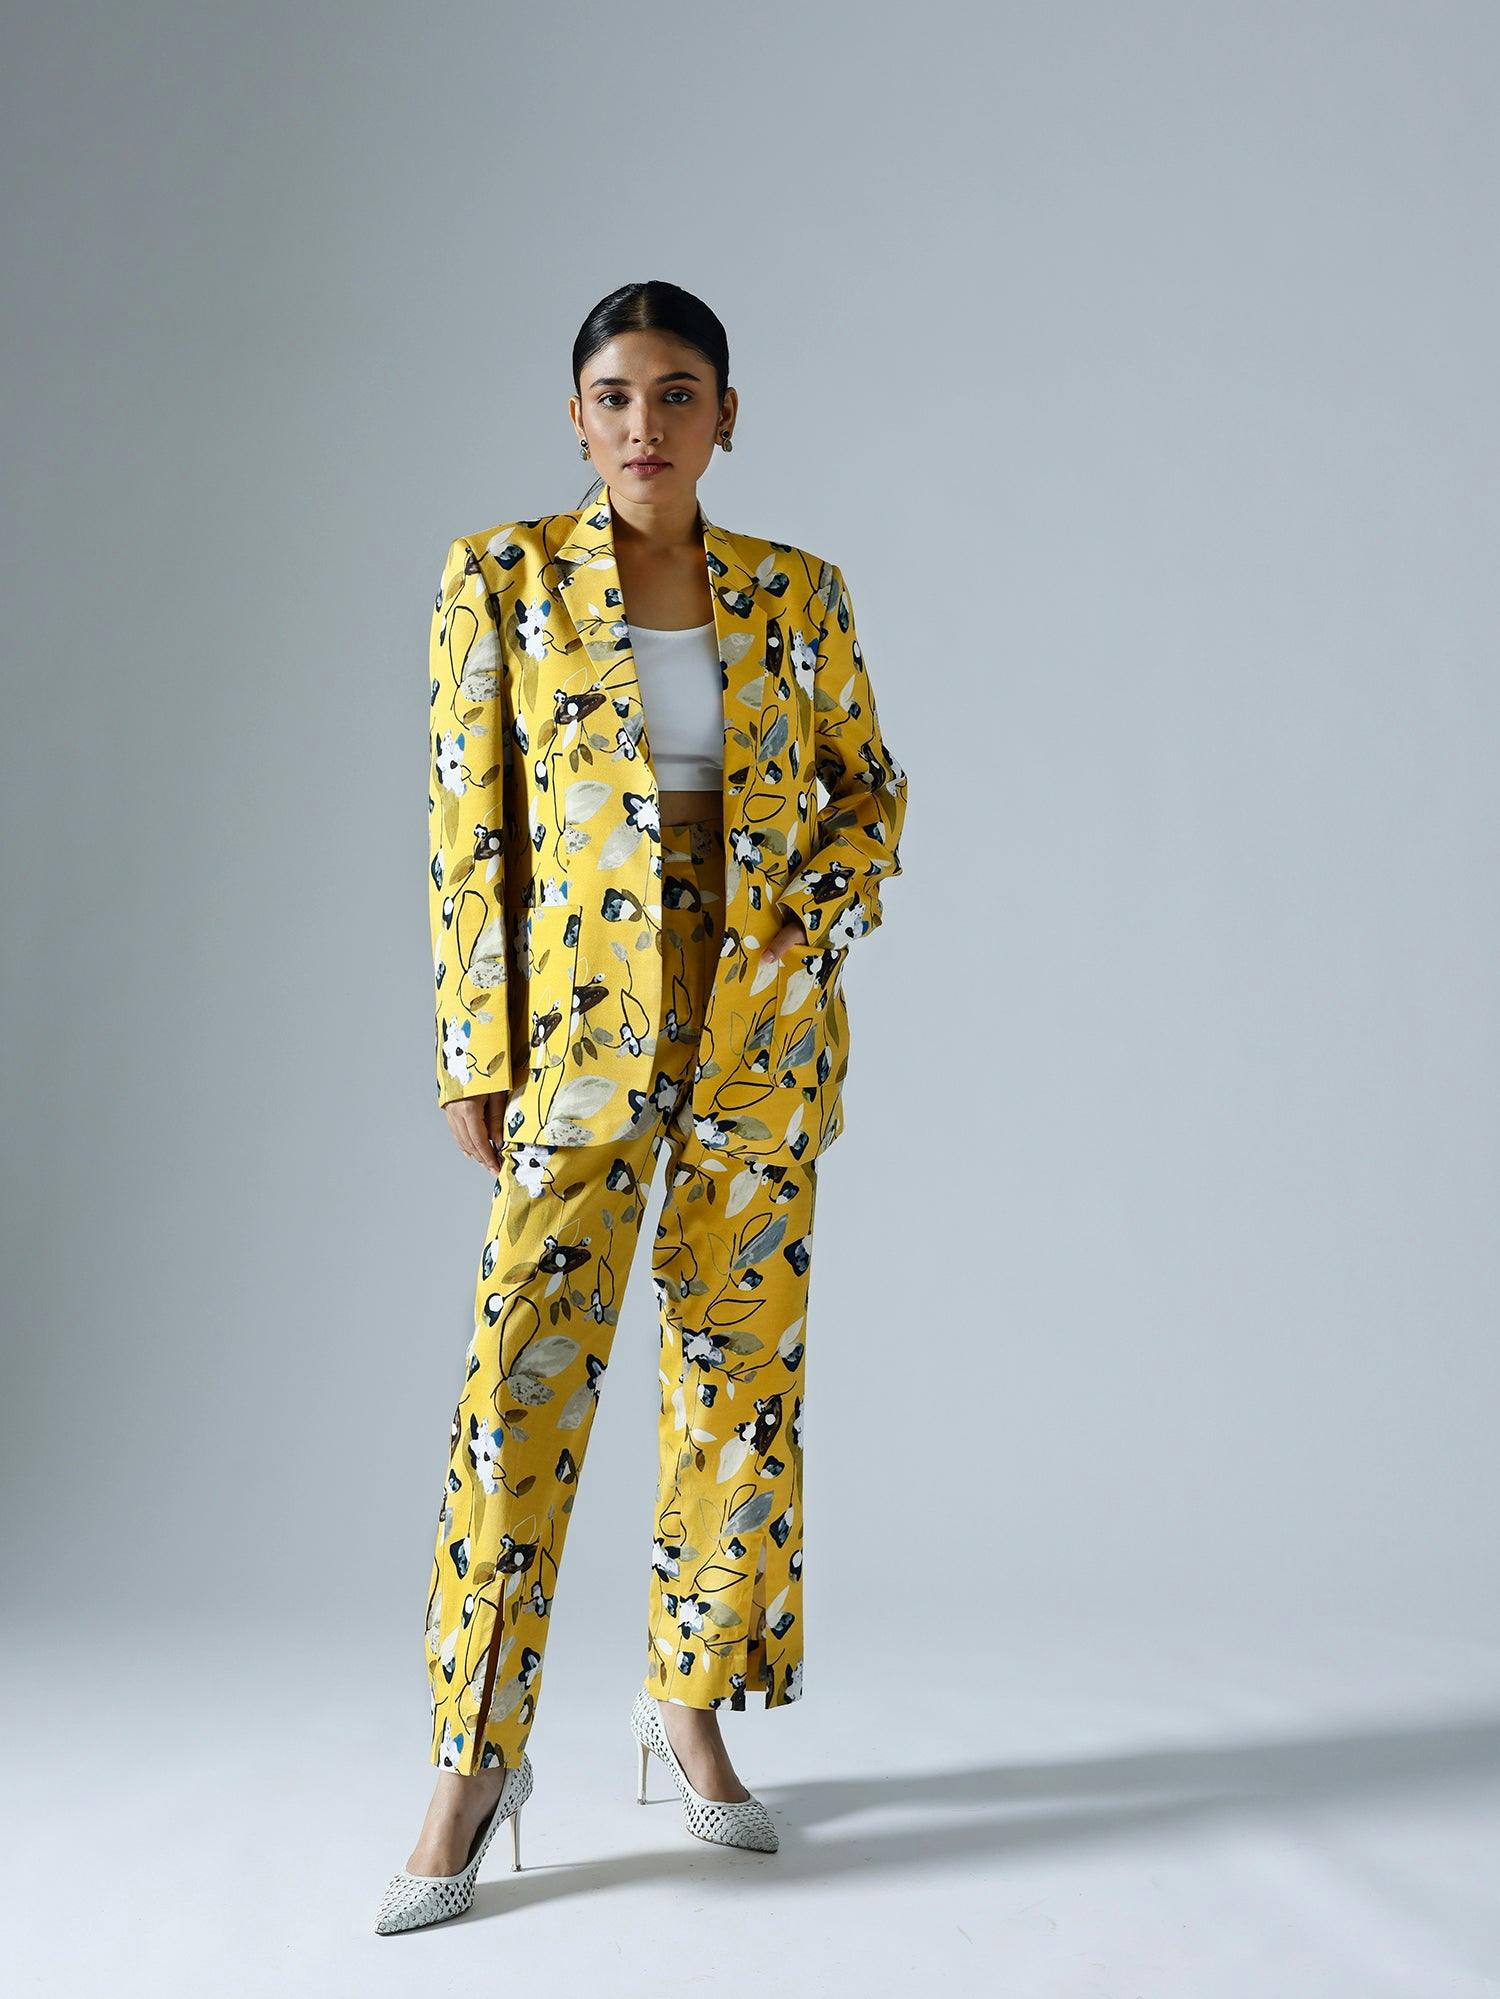 Vivid Yellow Pant Suit, a product by KLAD